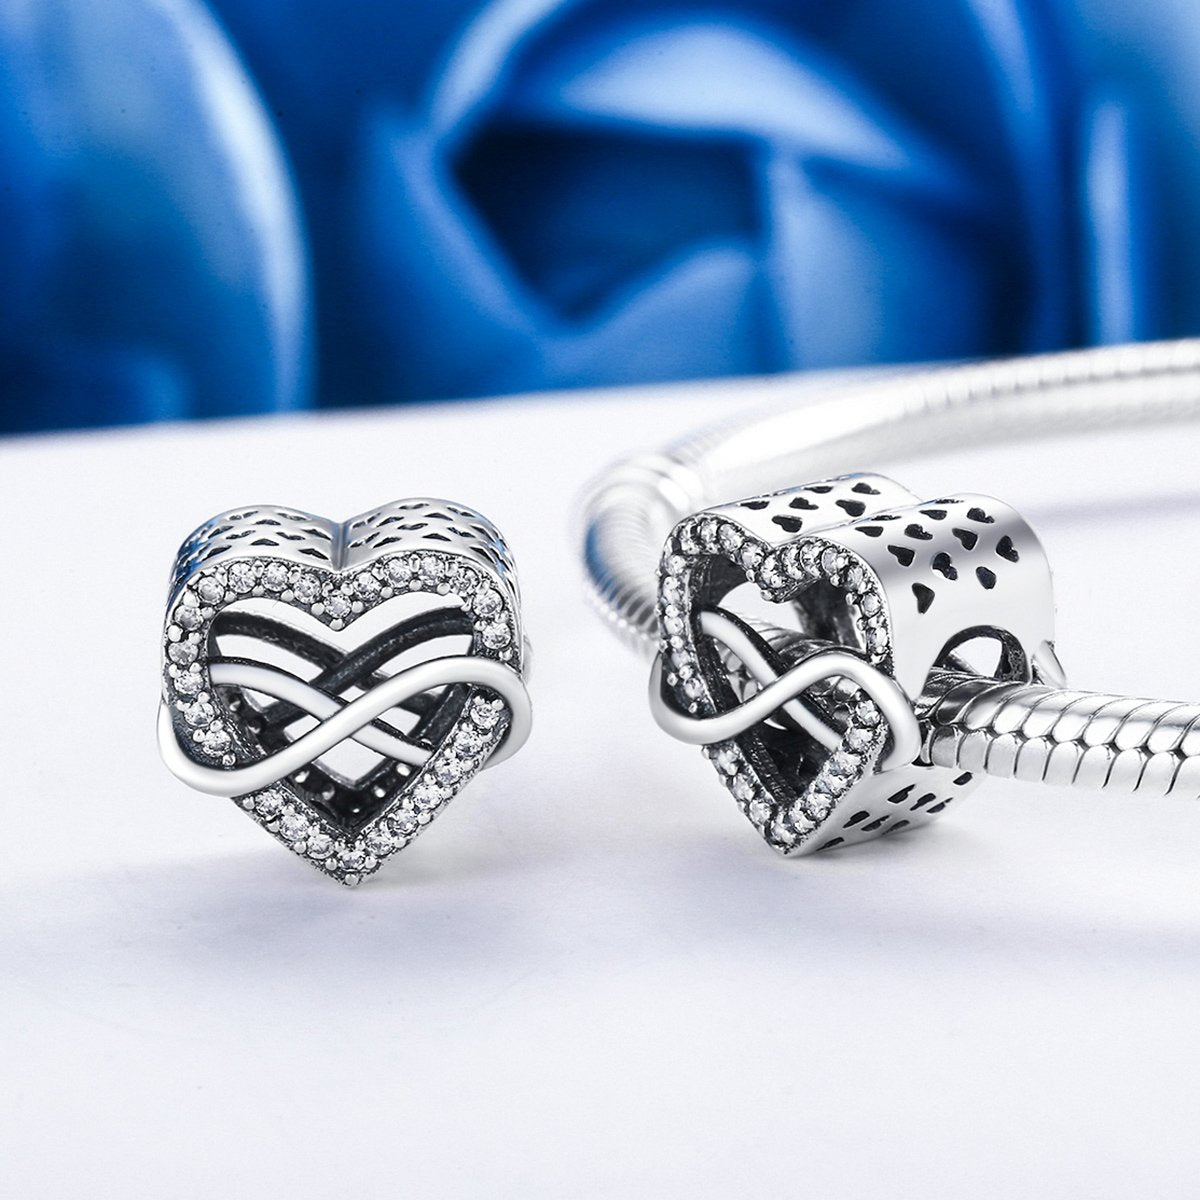 Sterling 925 silver charm the GIFT love bead pendant fits Pandora charm and European charm bracelet Xaxe.com